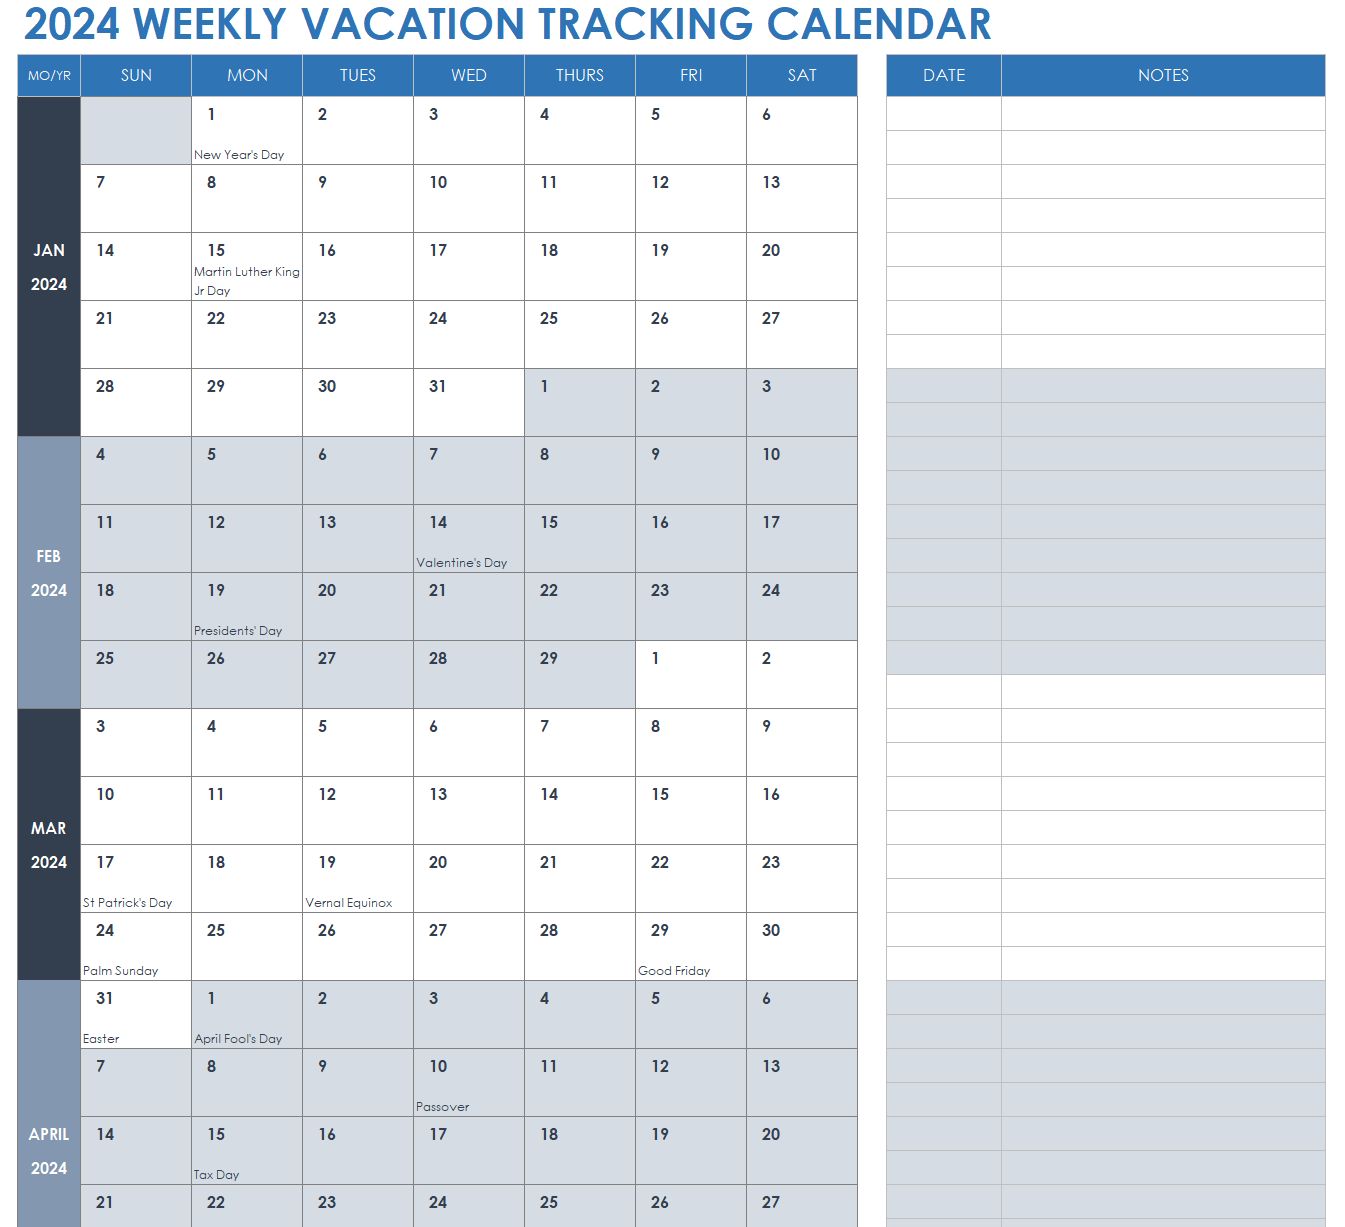 2024 Weekly Vacation Tracking Calendar